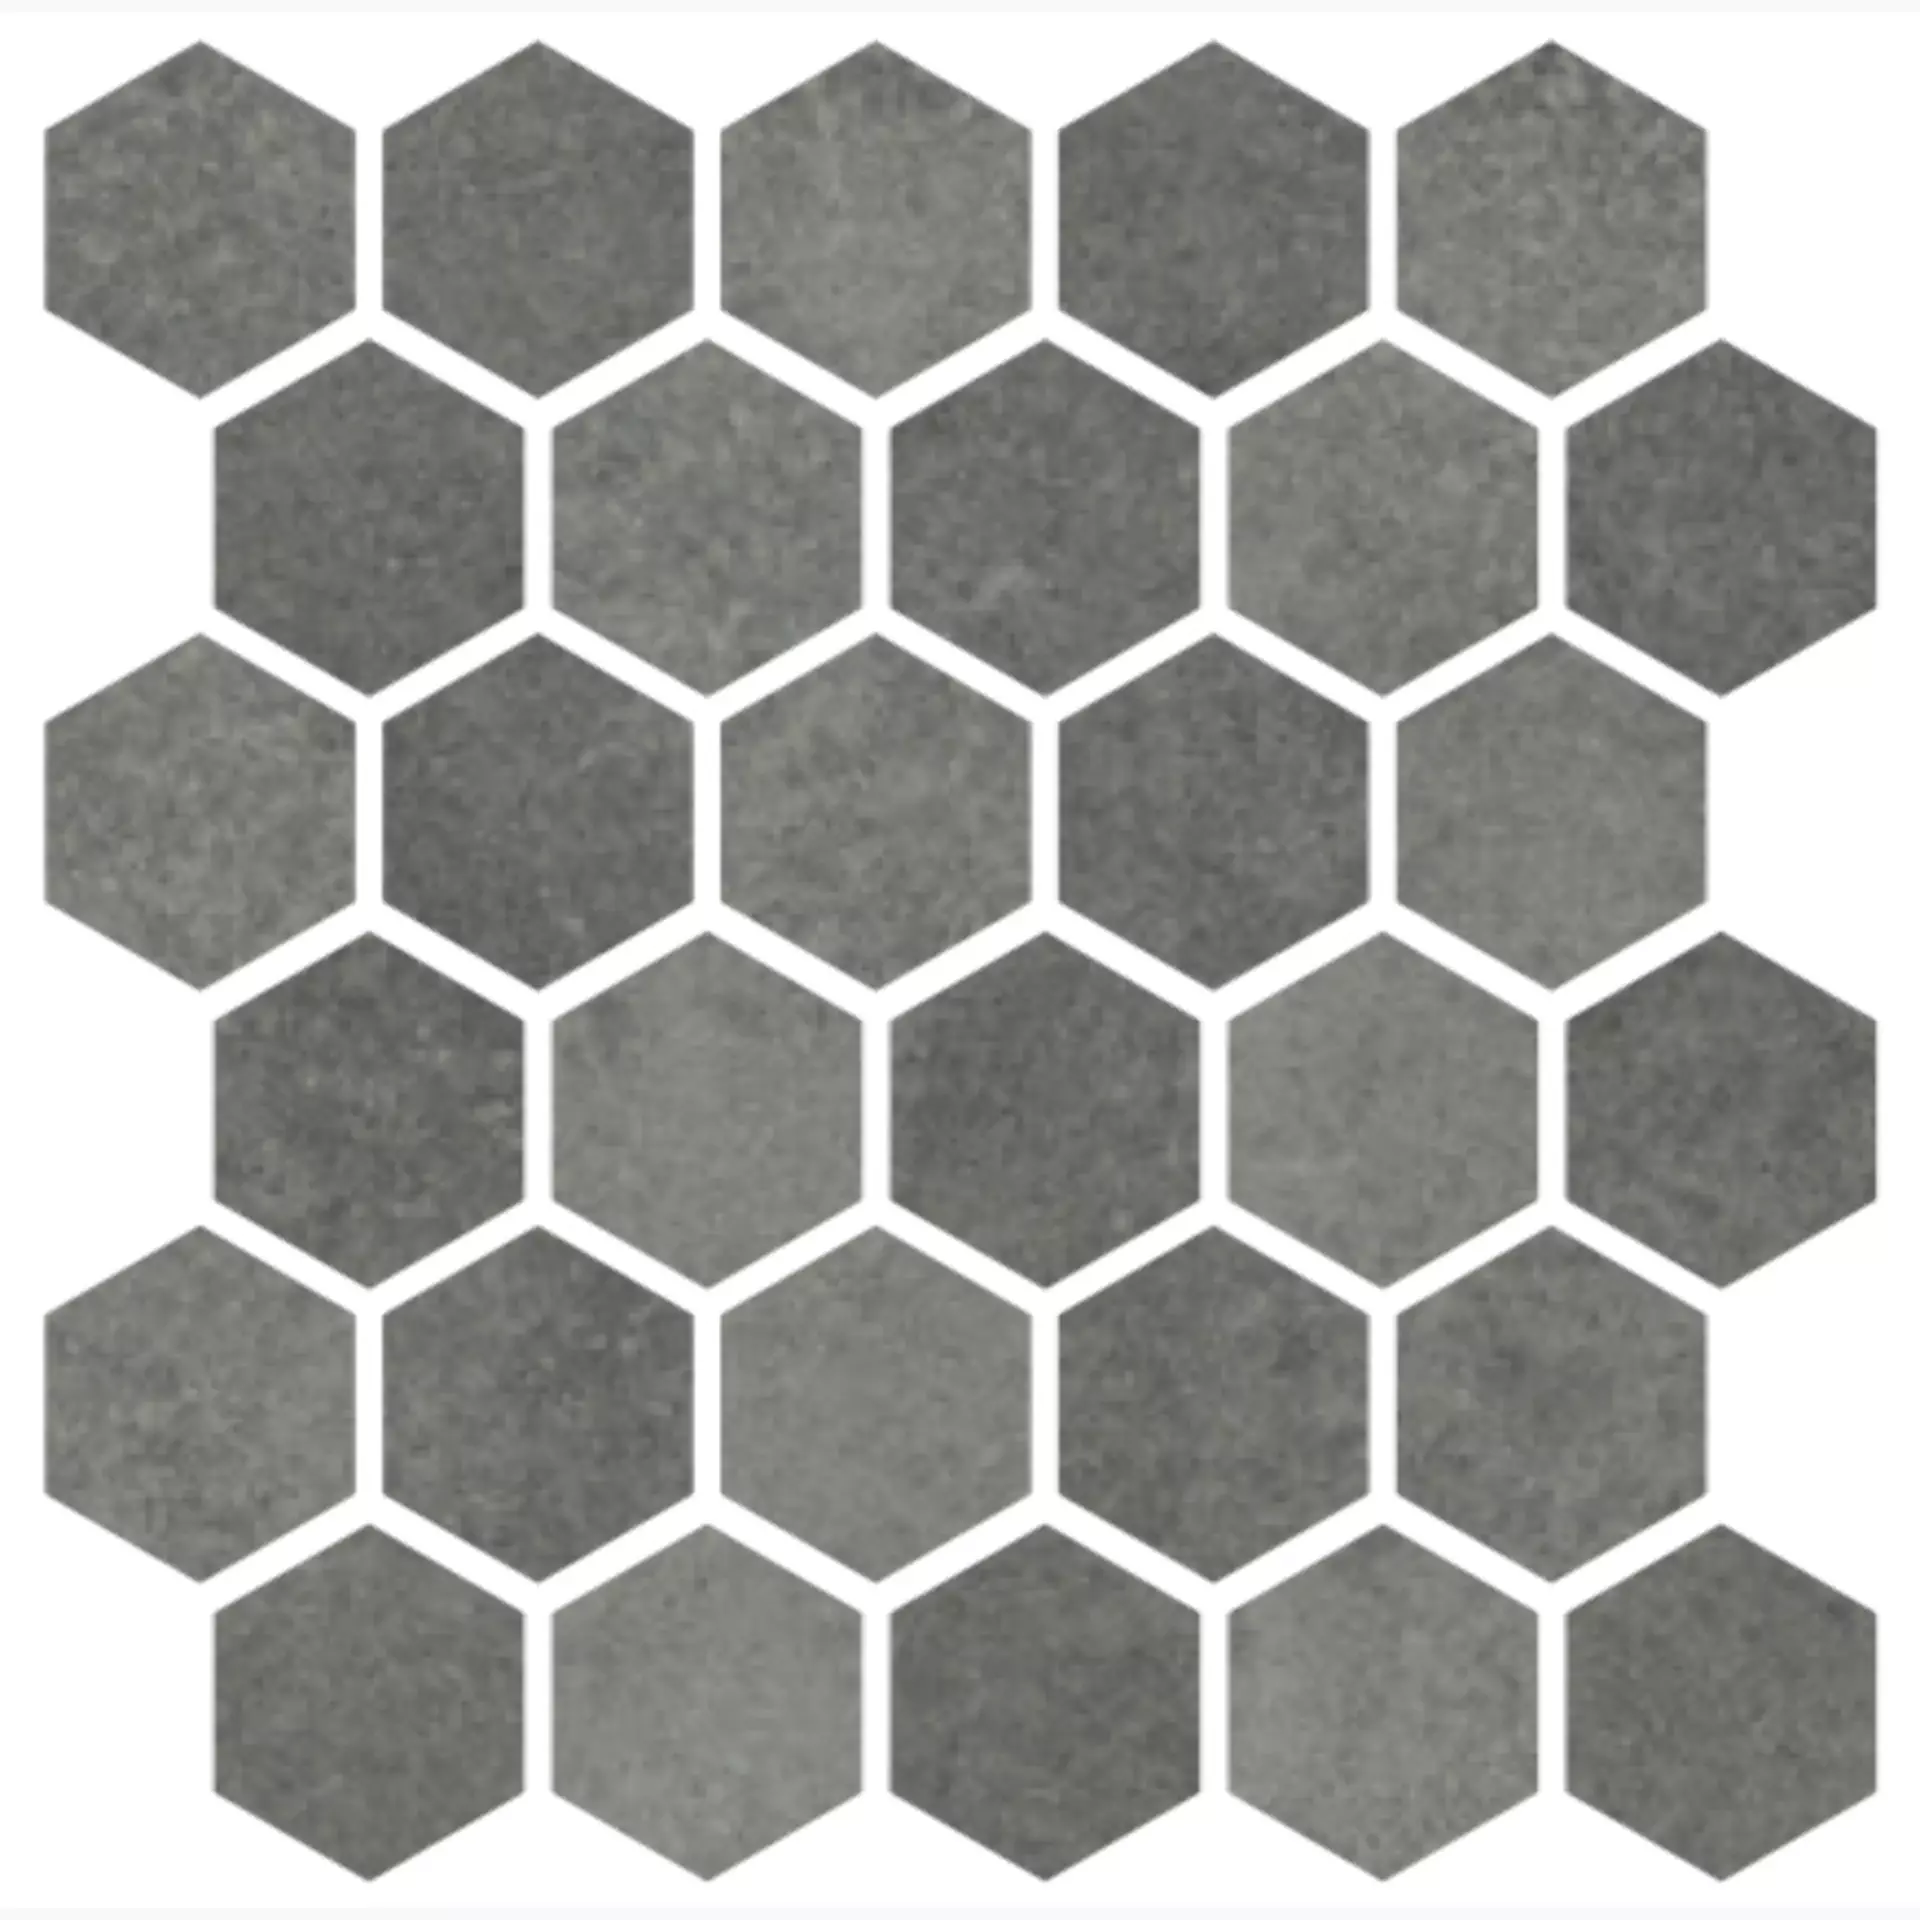 CIR Materia Prima Hunter Green Naturale Mosaik Hexagon 1069912 27x27cm